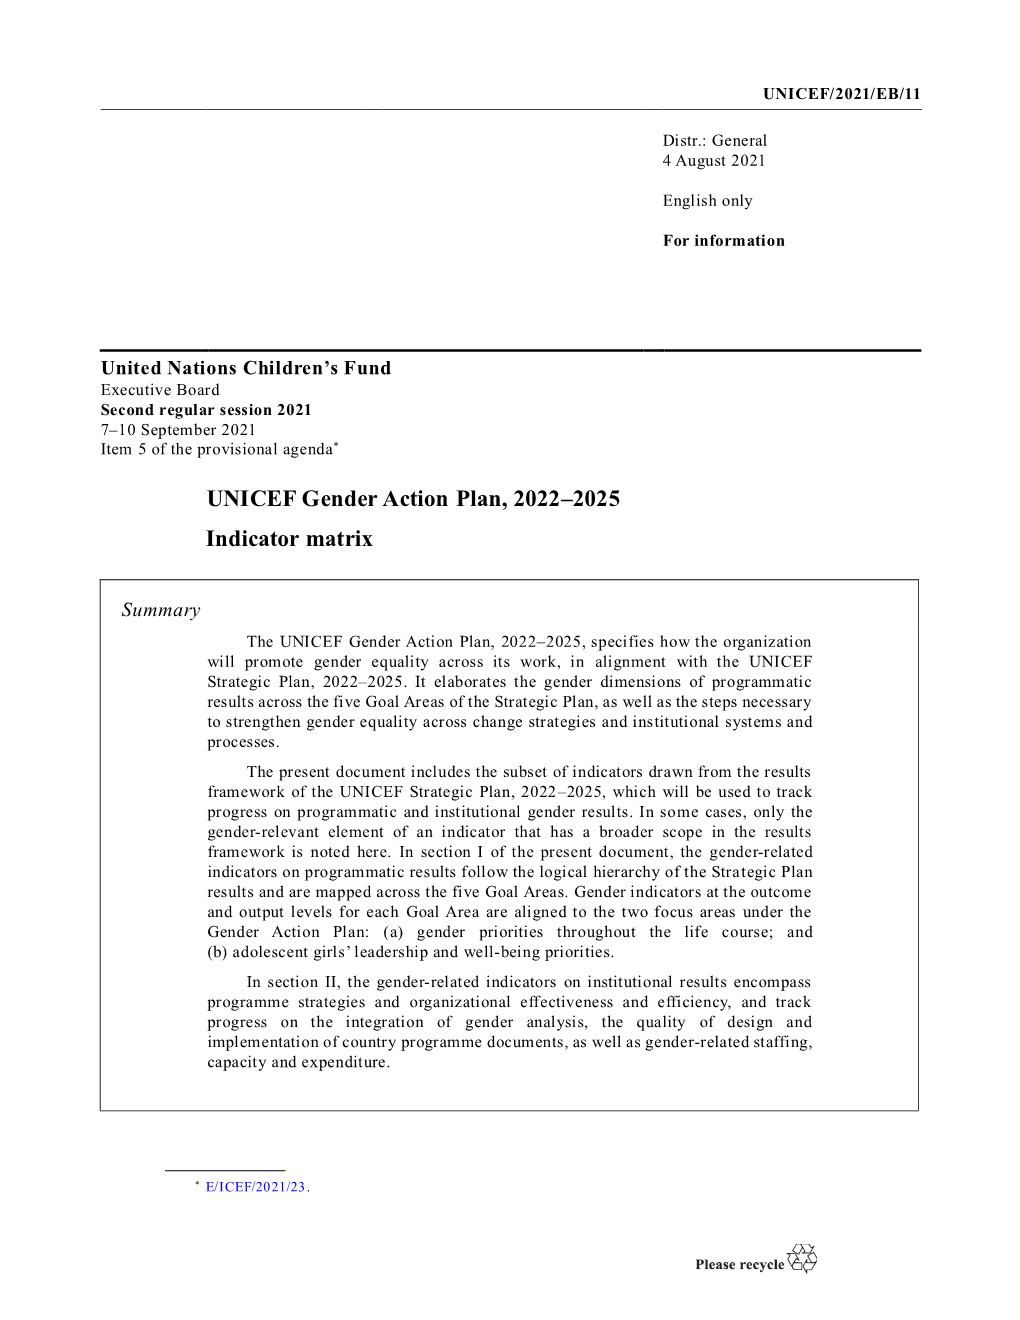 UNICEF Gender Action Plan, 2022–2025 Indicator Matrix